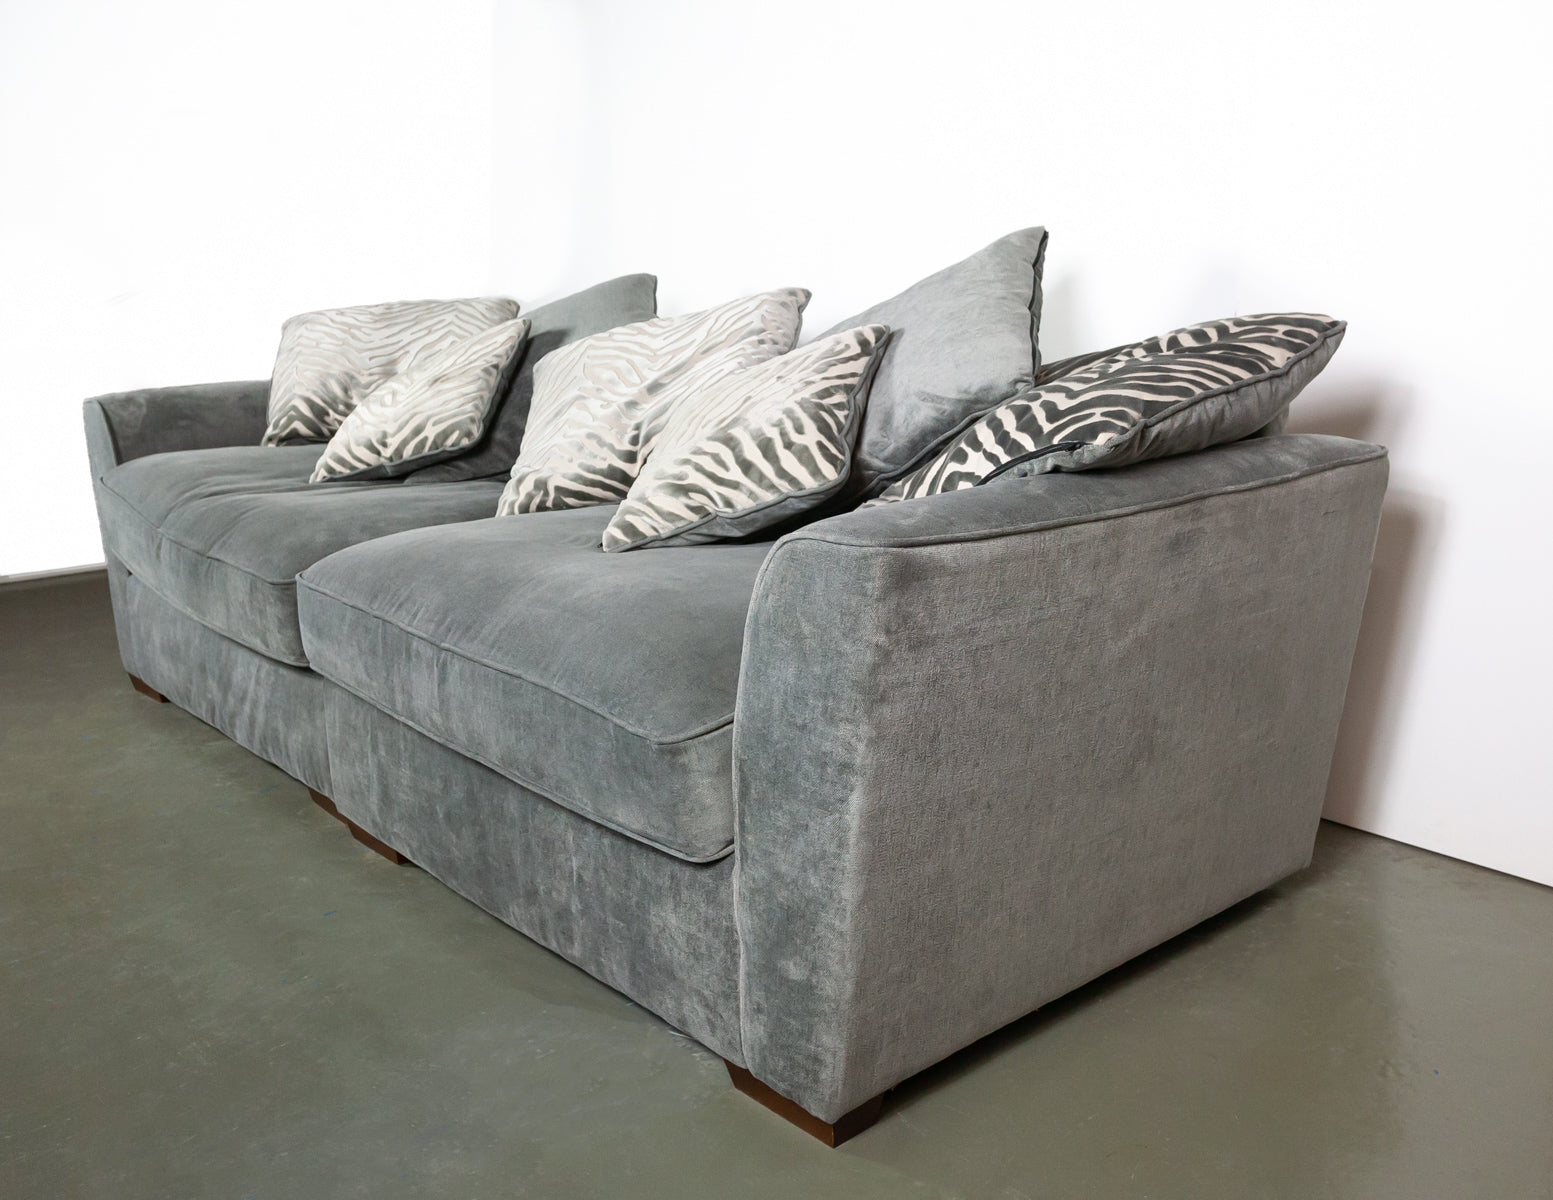 Furniture Village Kingston Upholstered Sofa